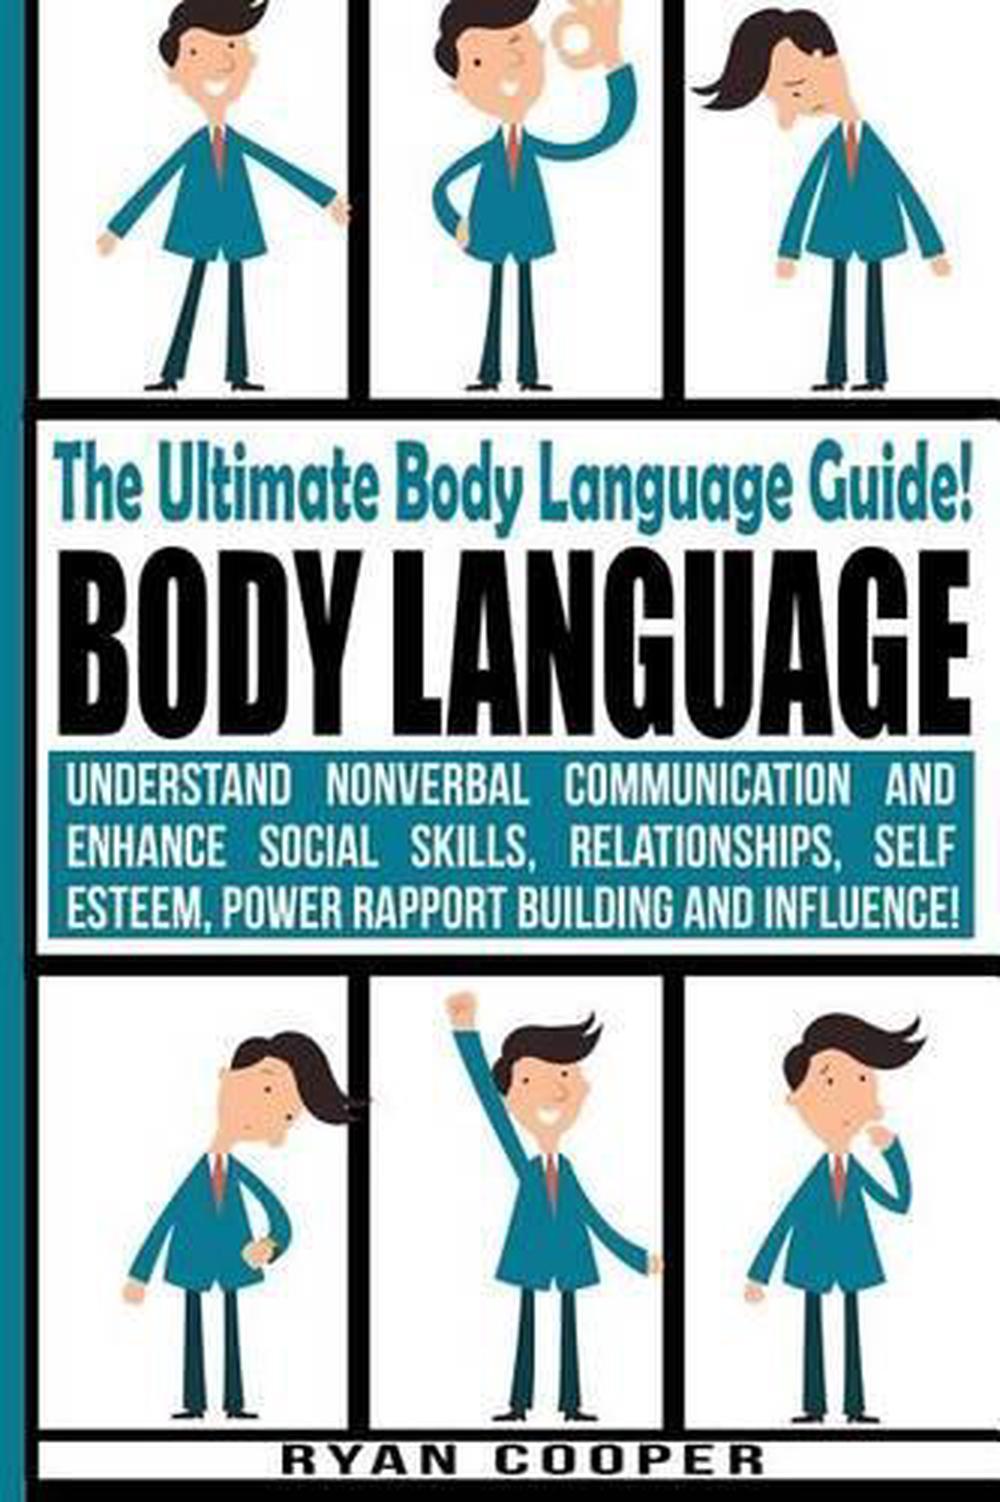 Body language. Under the influence (body language). Communication and standing skills. Body language 1992. Body communication